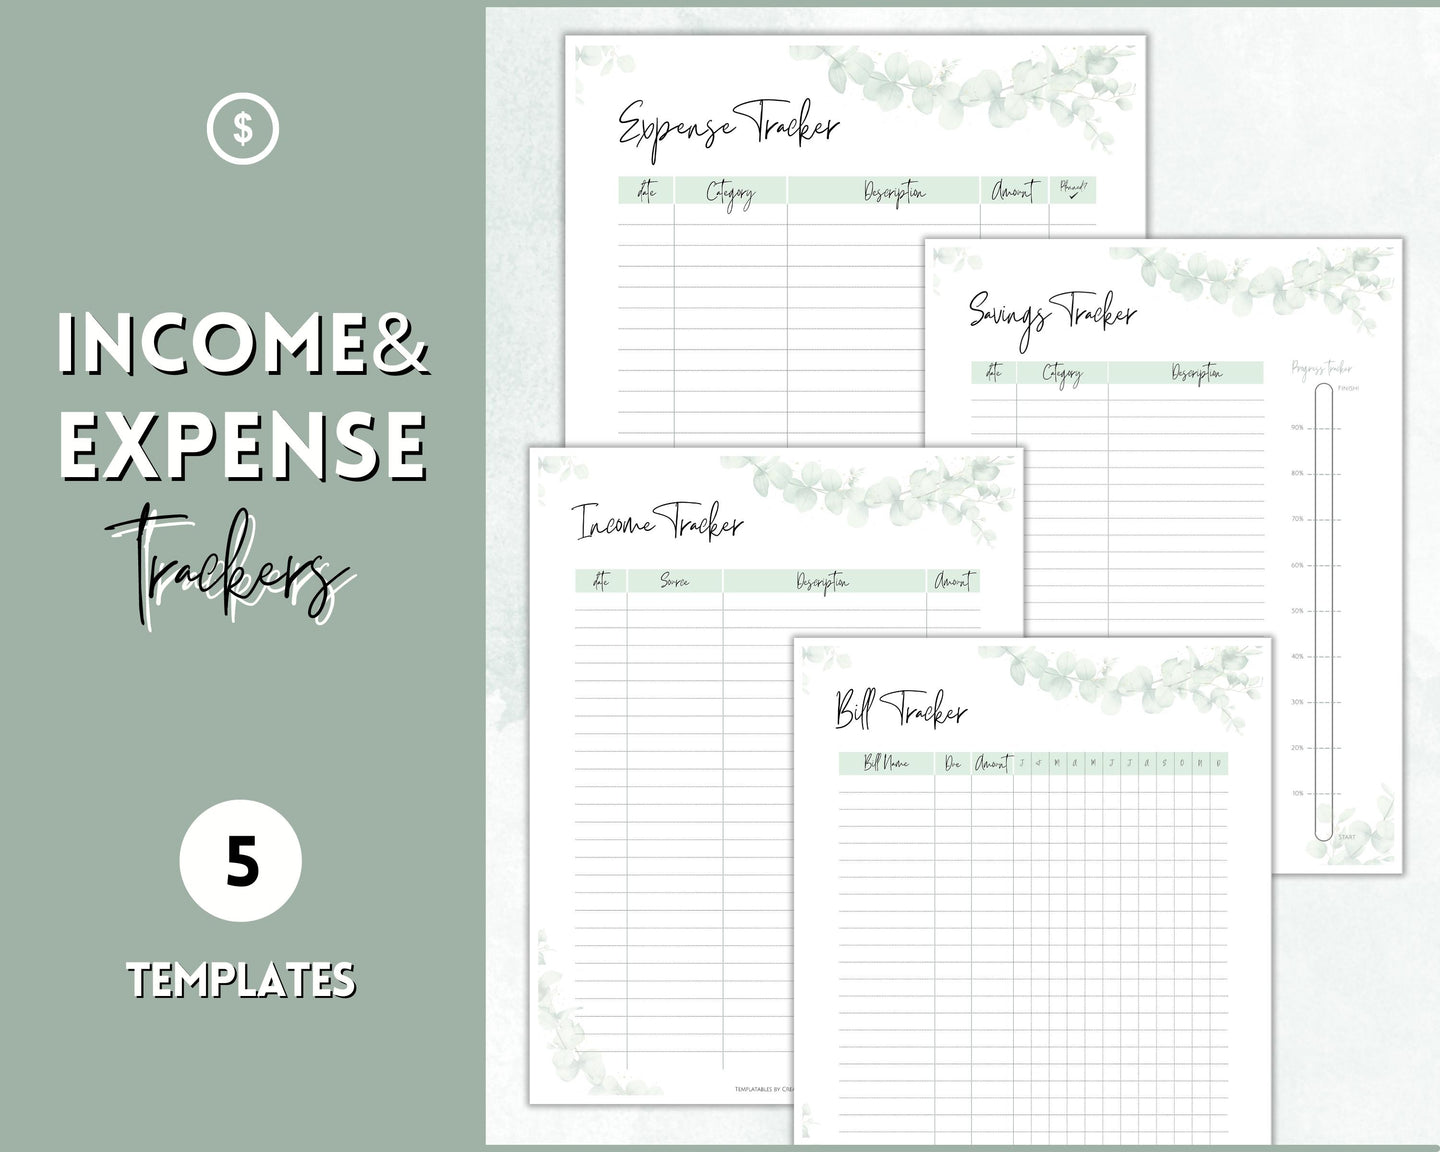 Savings Tracker BUNDLE | Income, Expenses, Savings & Bill Tracker Printables, Personal Finance Planner Binder | Green Eucalyptus